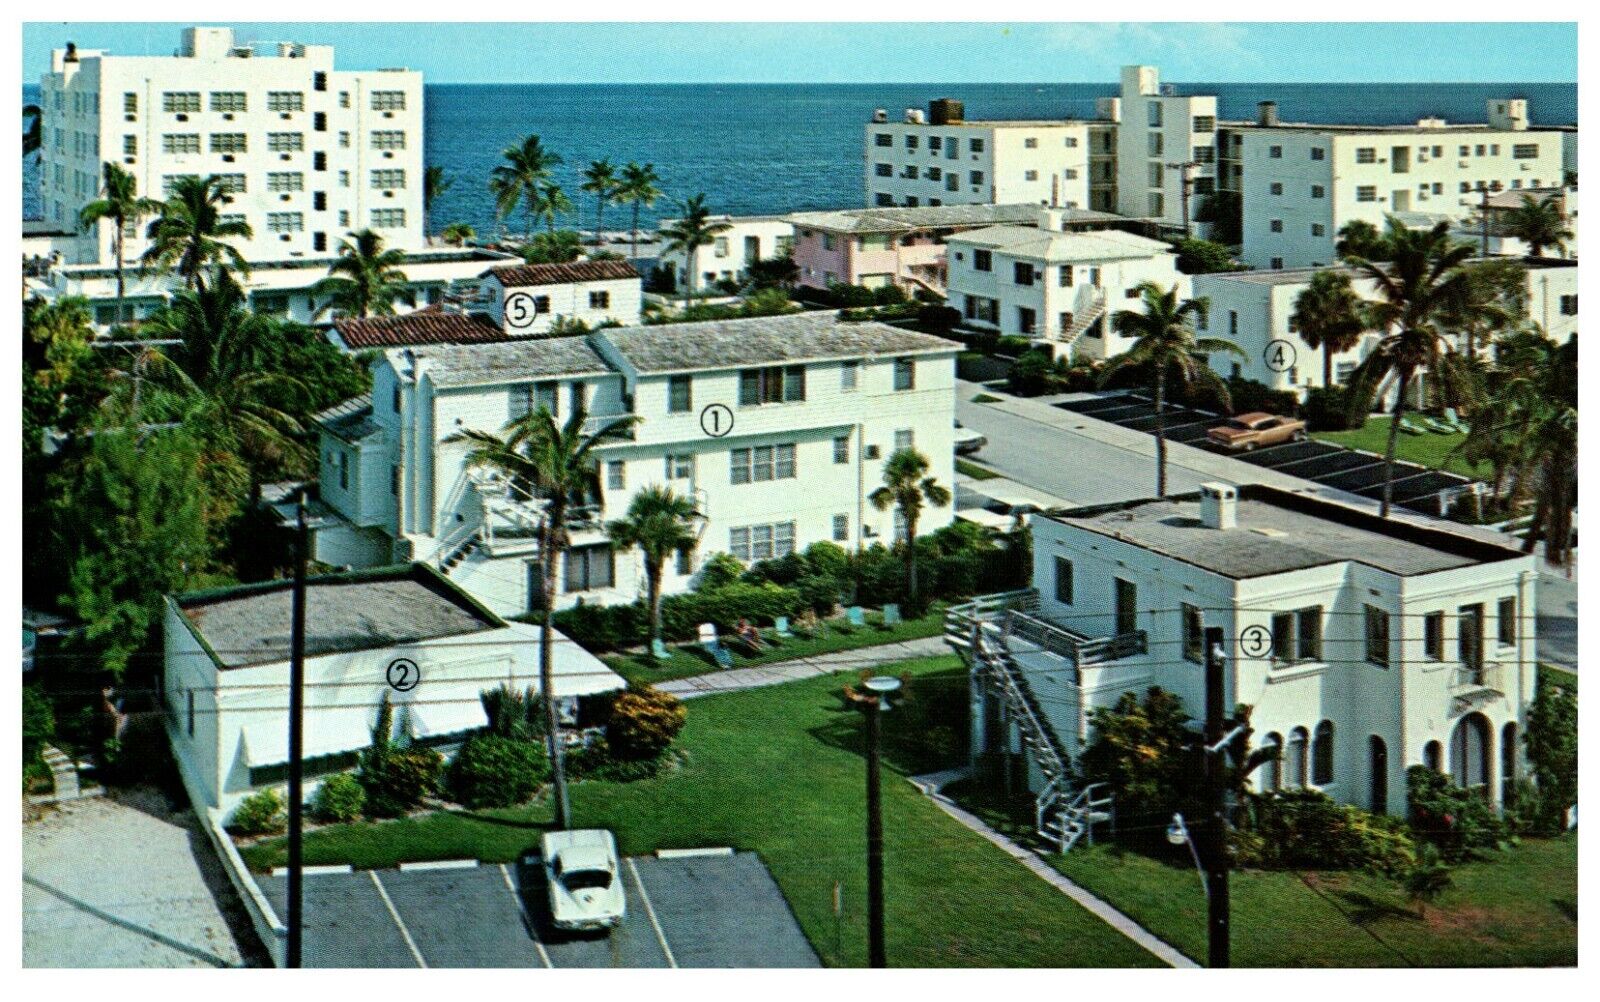 Rio-Mar Valencia Sea Air Apts Hotel Fort Lauderdale, FL Hotel Motel Adv POSTCARD